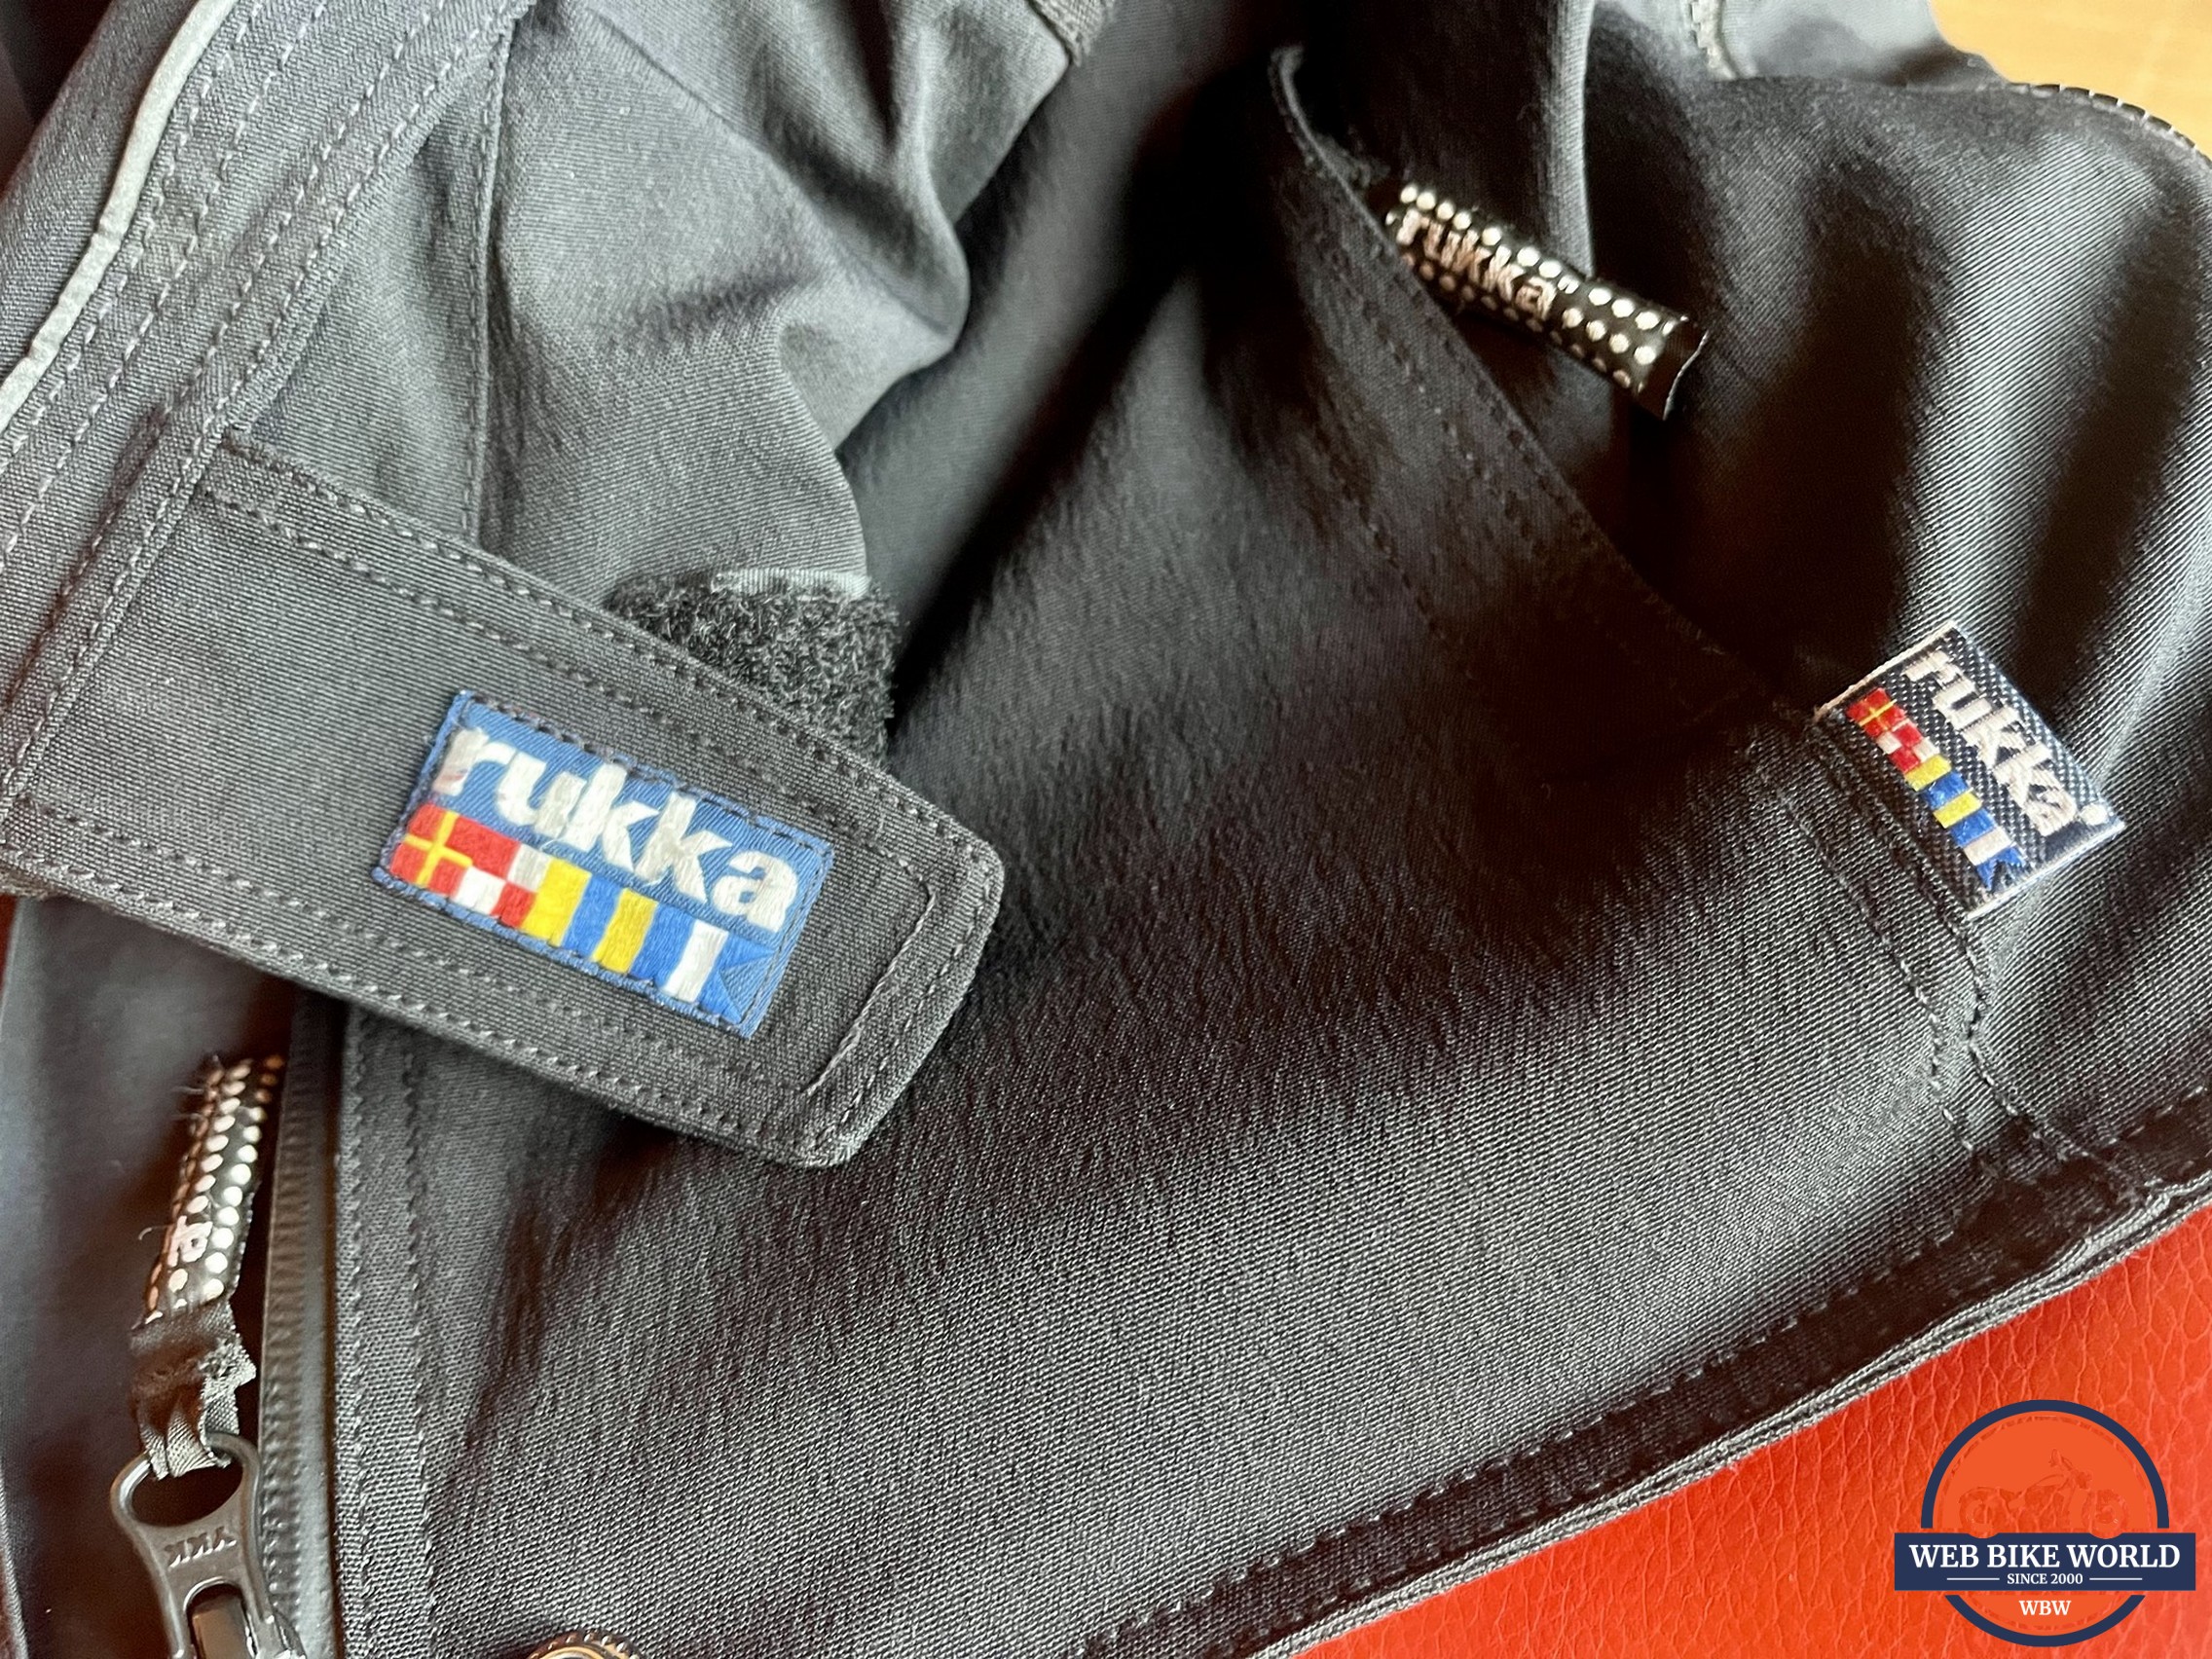 Closeup of the branding on the Rukka Comforina jacket